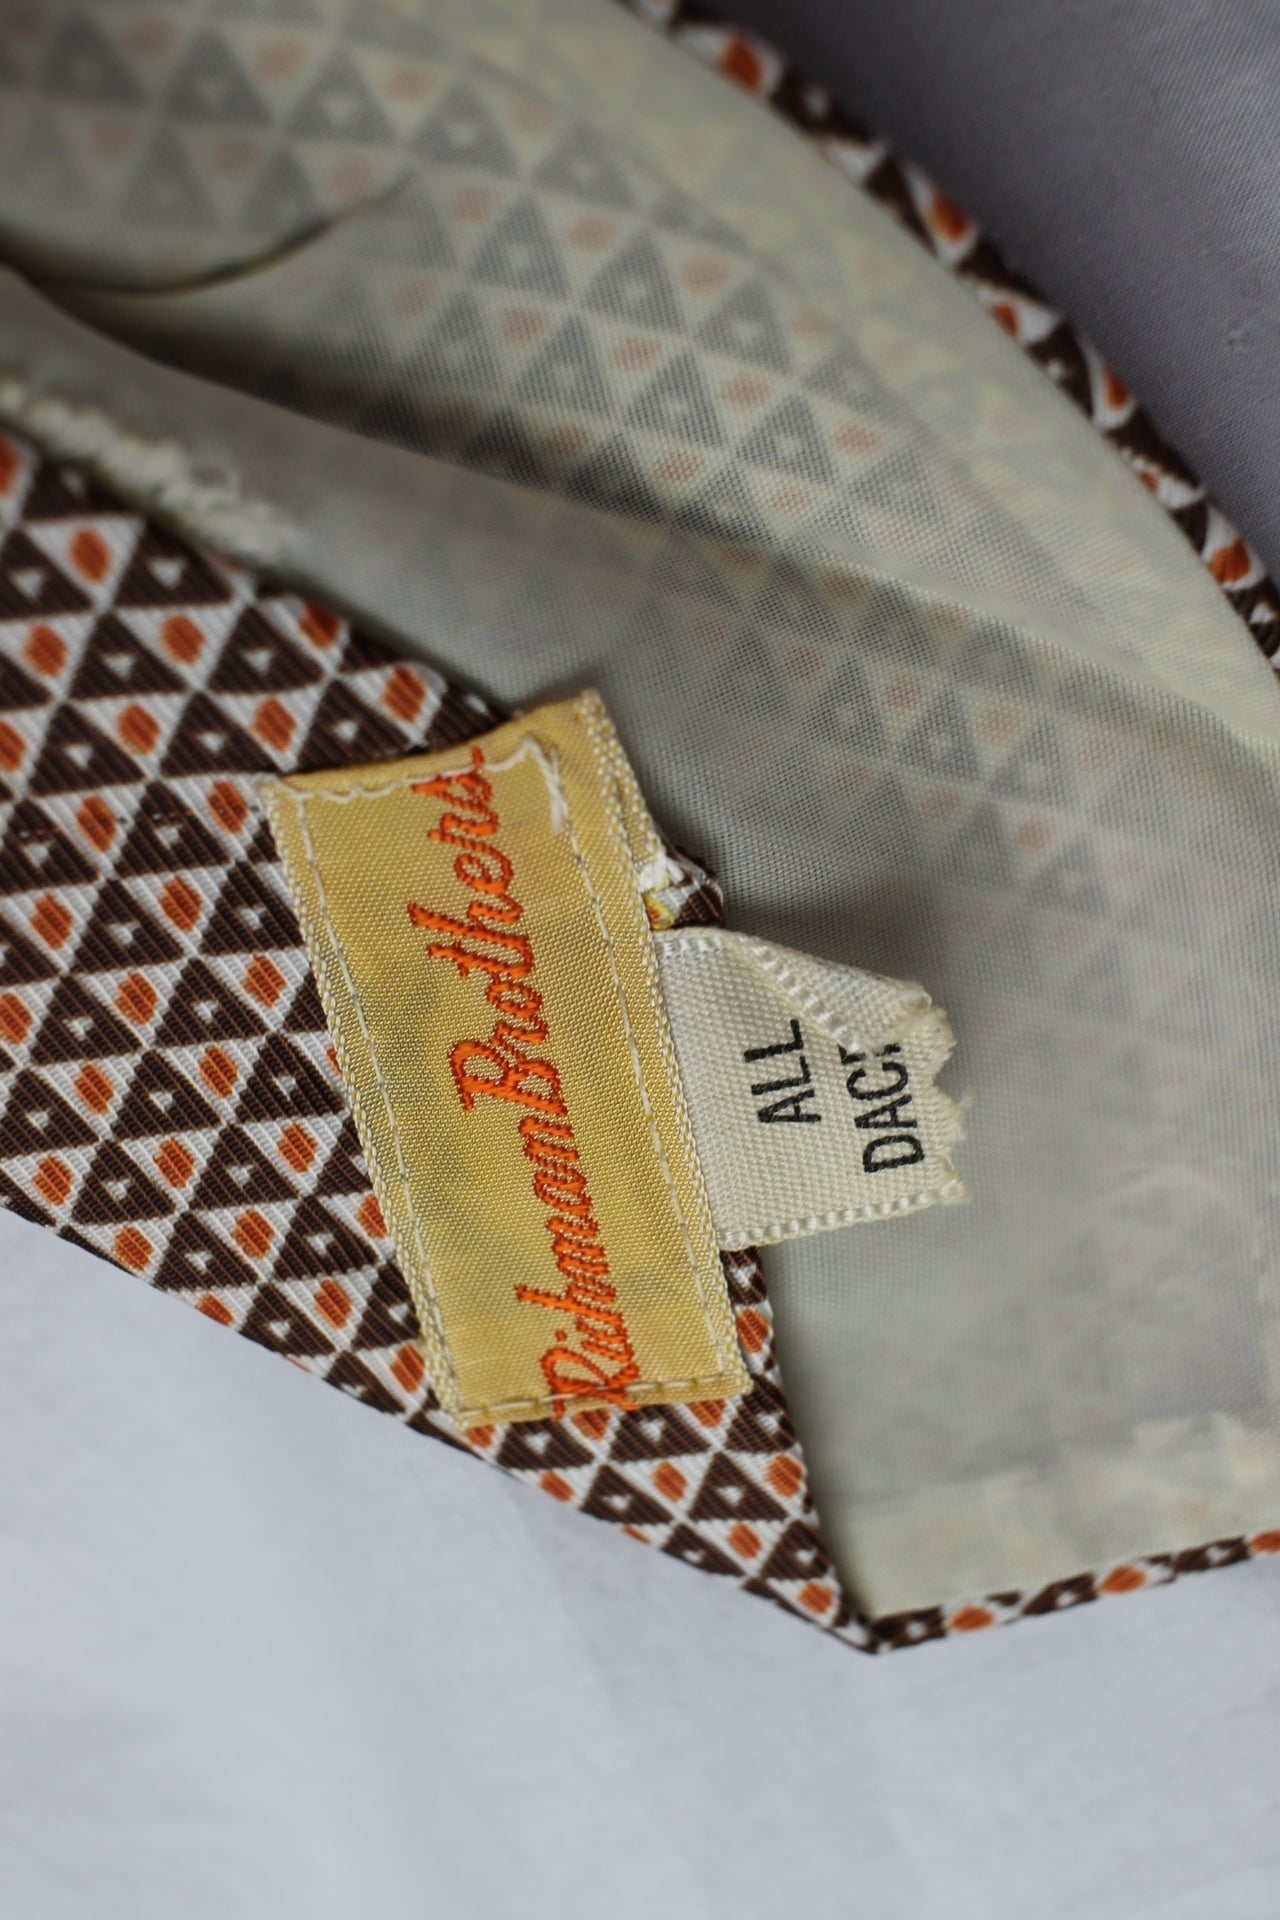 Vintage Richman Brothers 1940s/50s brown orange white triangle pattern tie